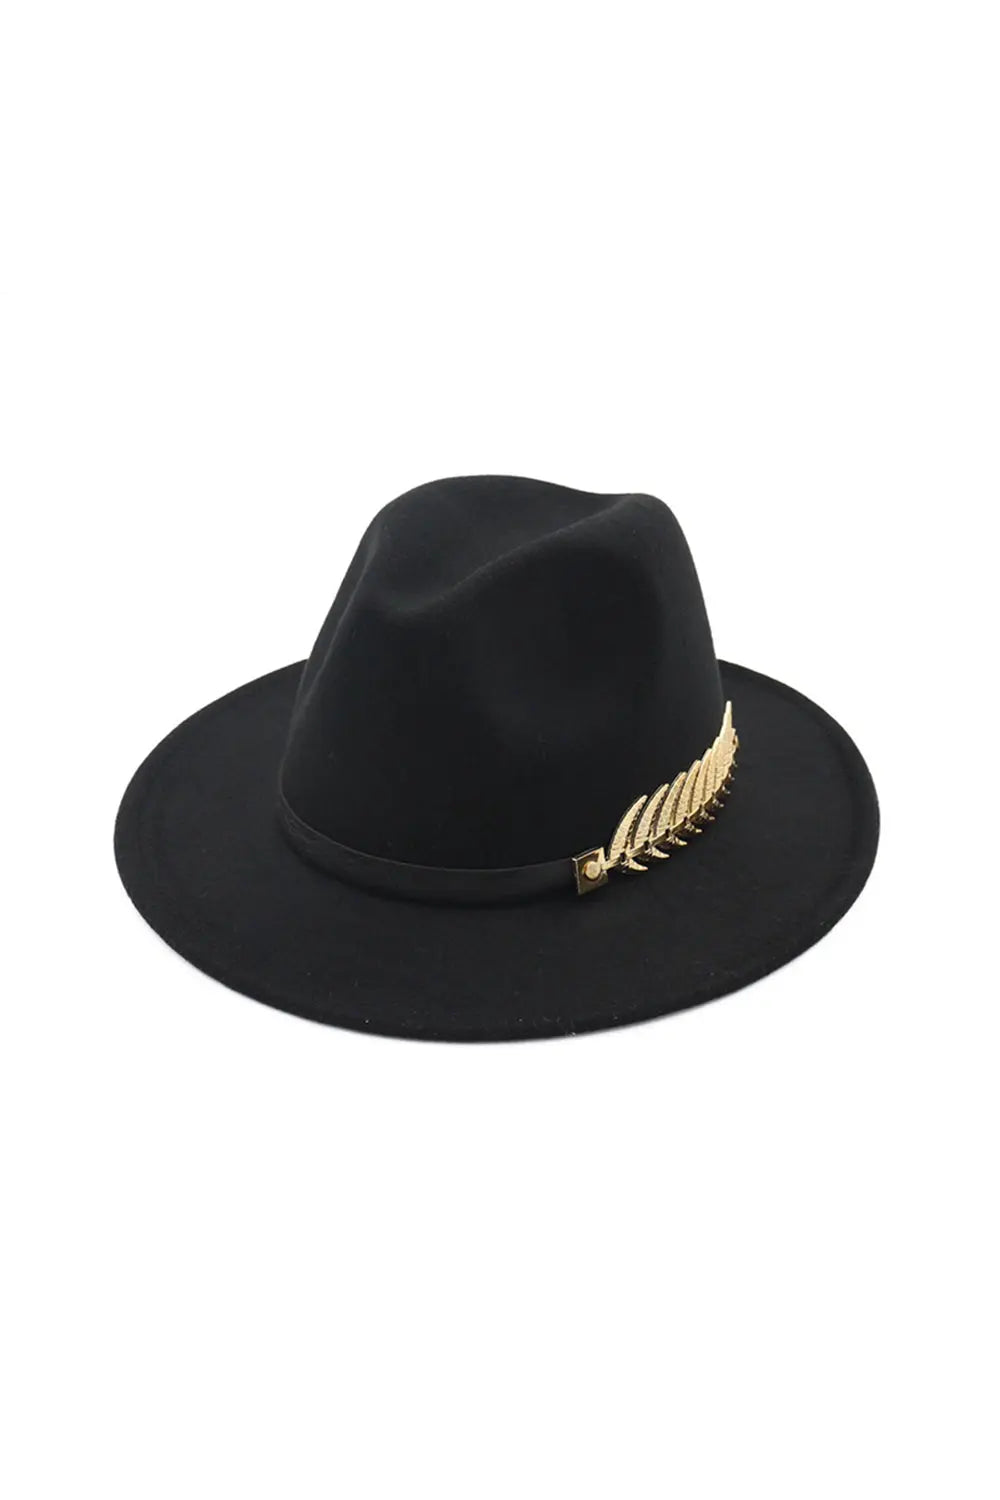 Jazz Hat - Black - Strange Clothes